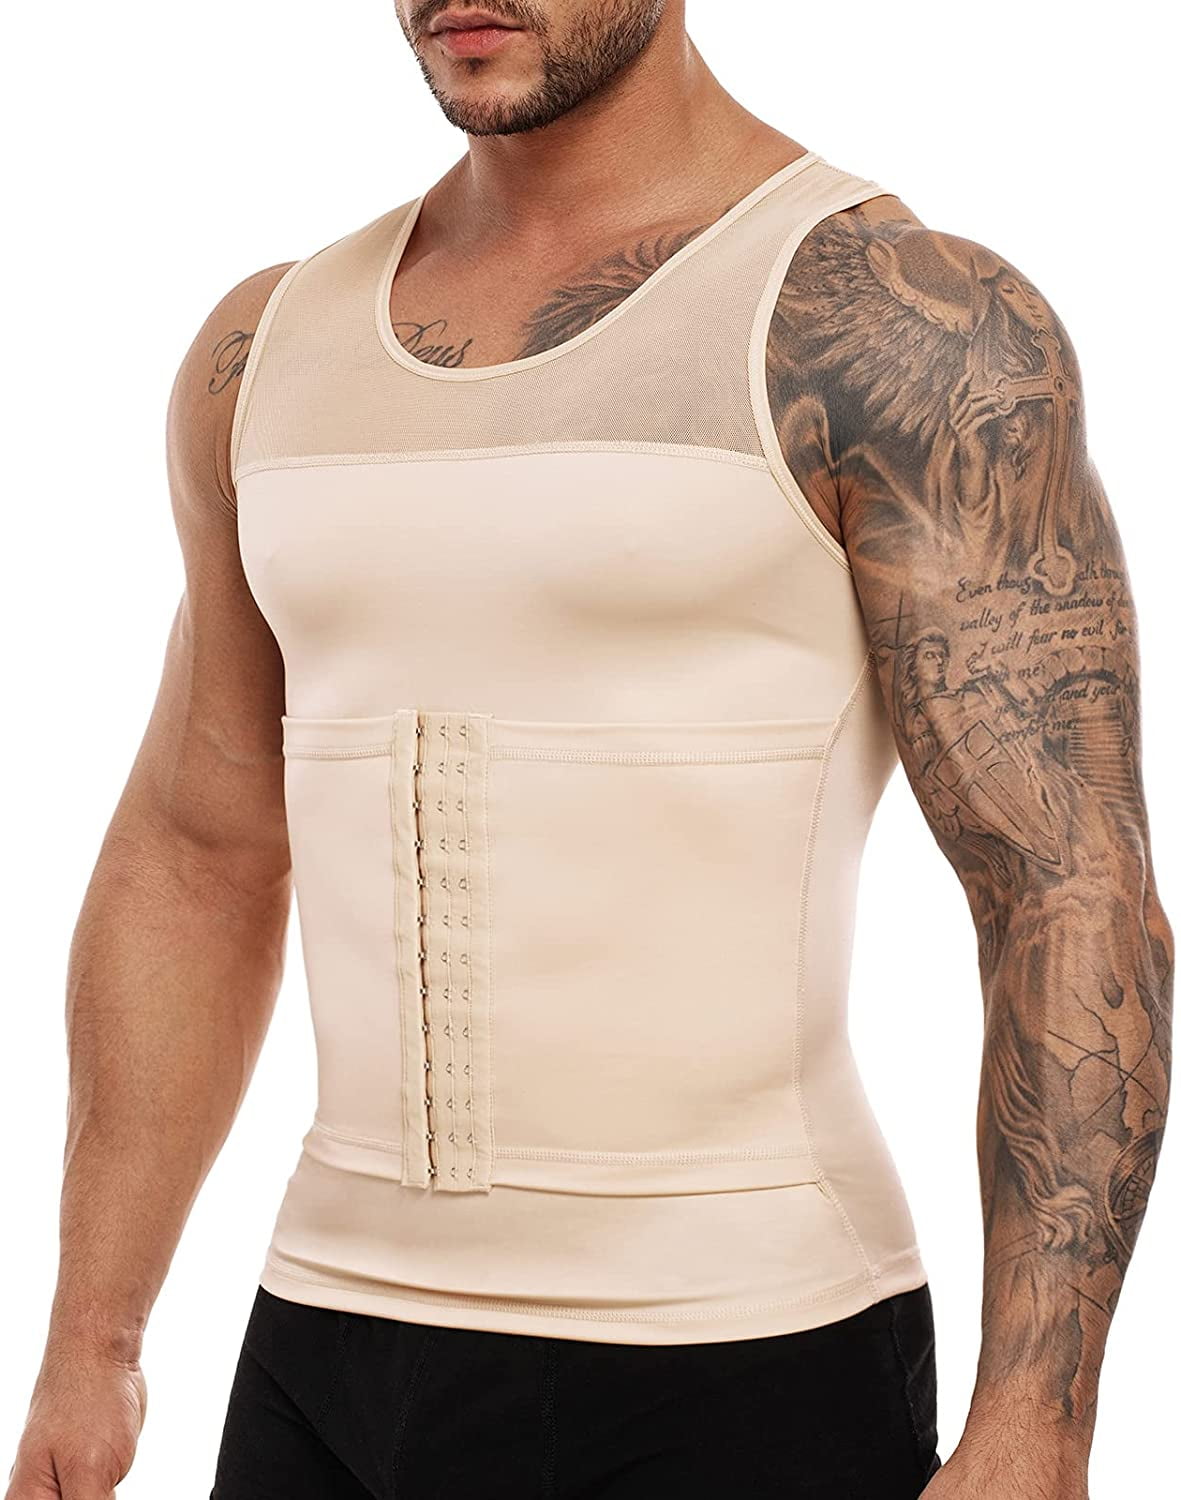 Gotoly Mens Compression Shirt Slimming Body Shaper Vest Sleeveless  Undershirt Tank Top Tummy Control Shapewear for Men(Beige 3X-Large)